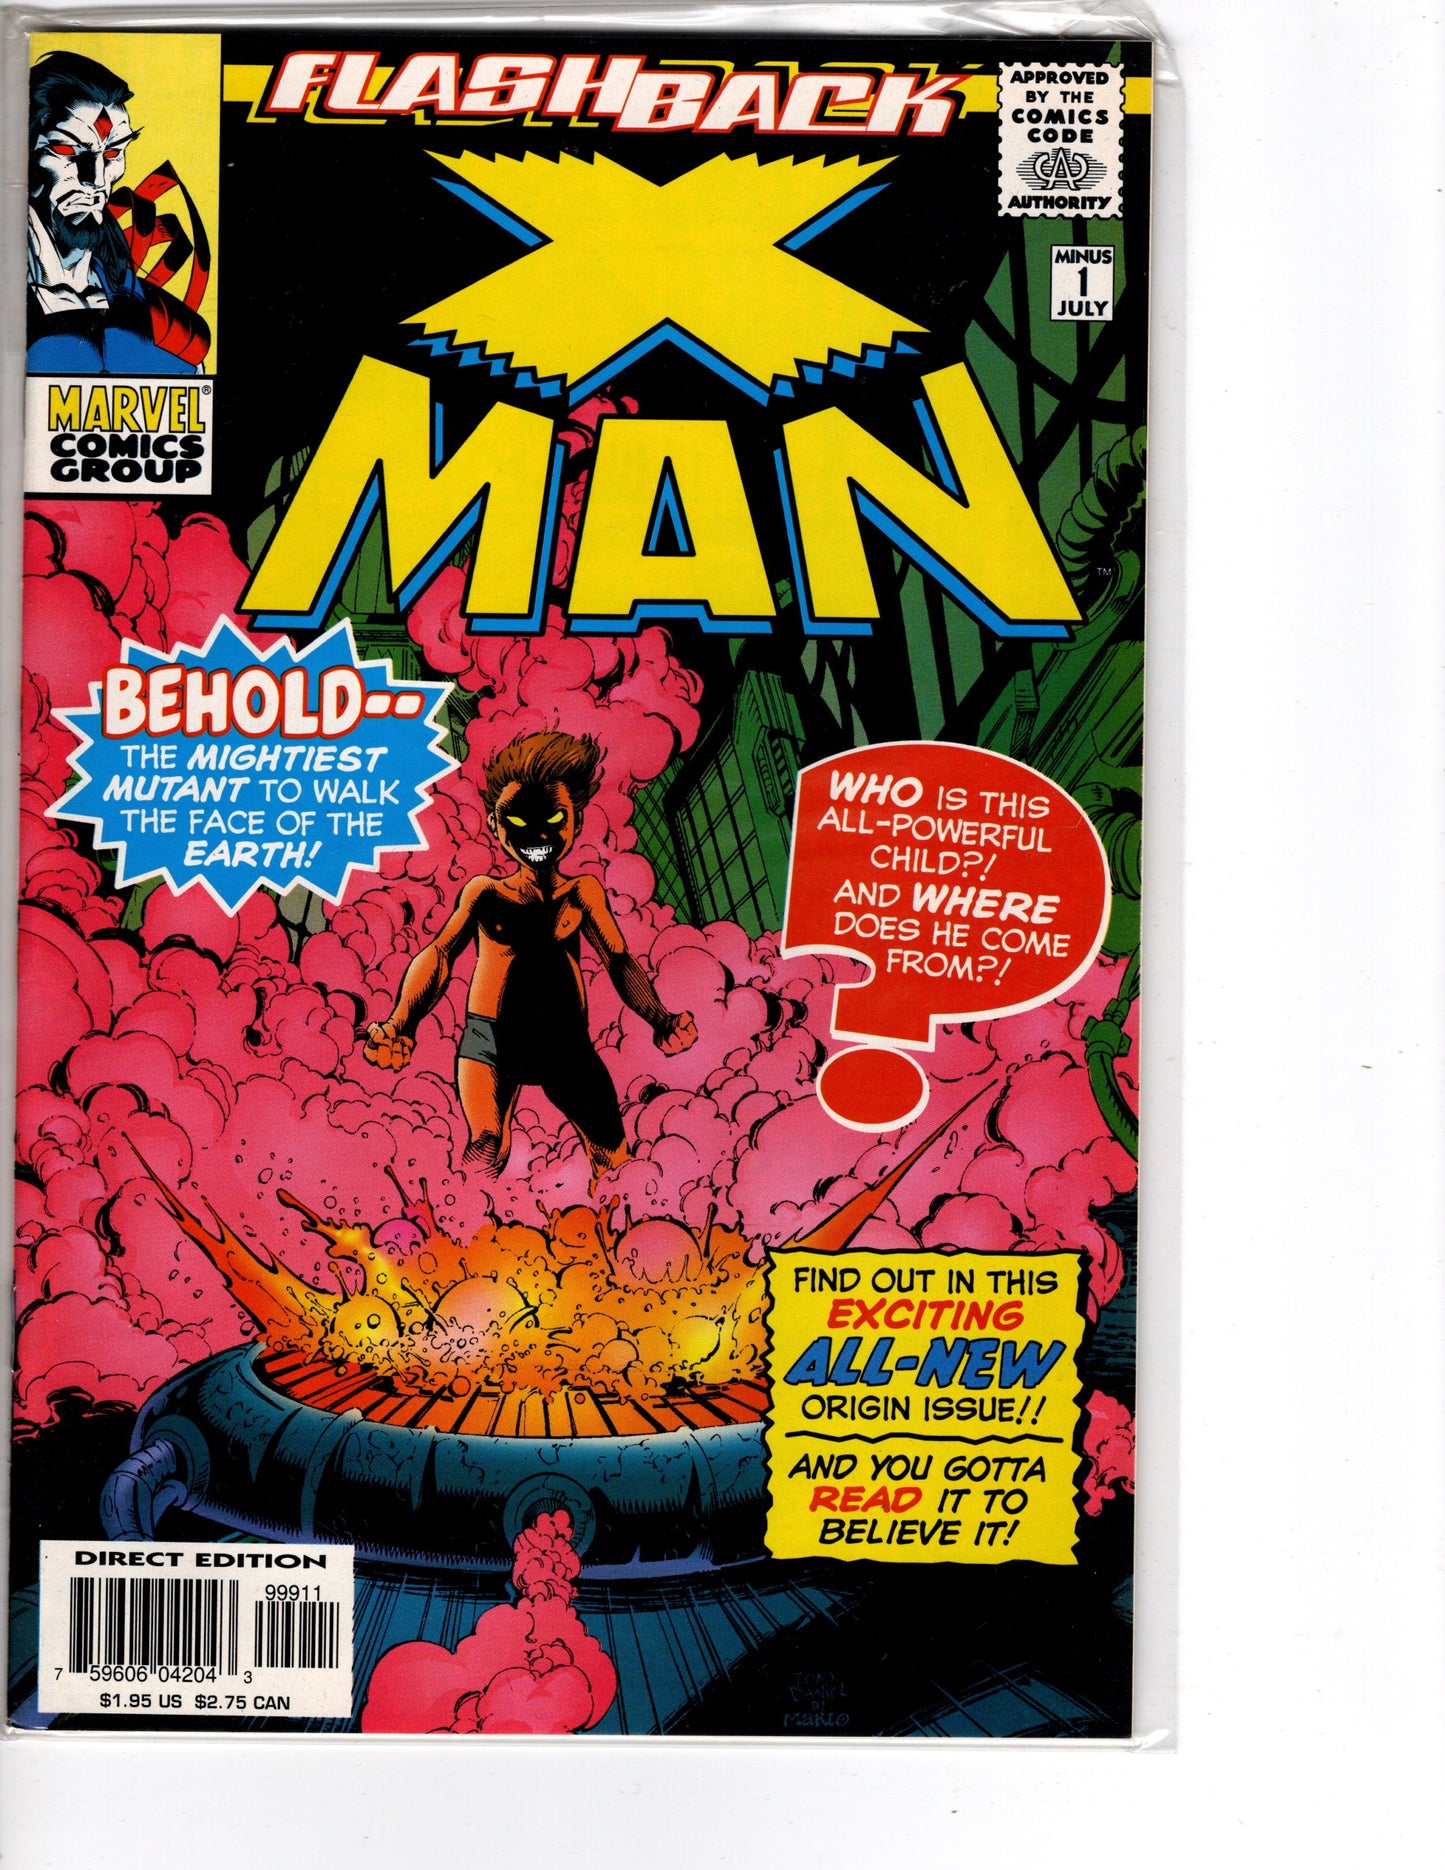 Flashback X-Man #1